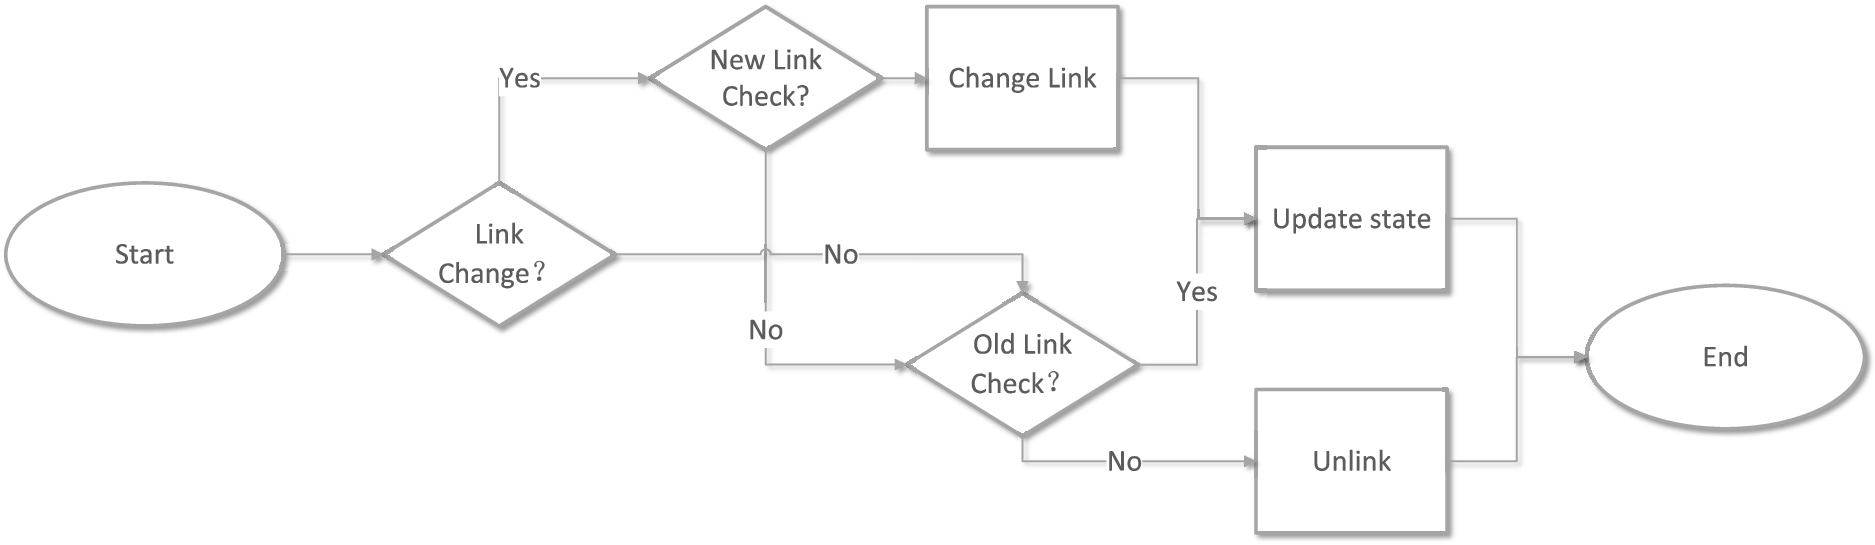 Workflow of link updating.